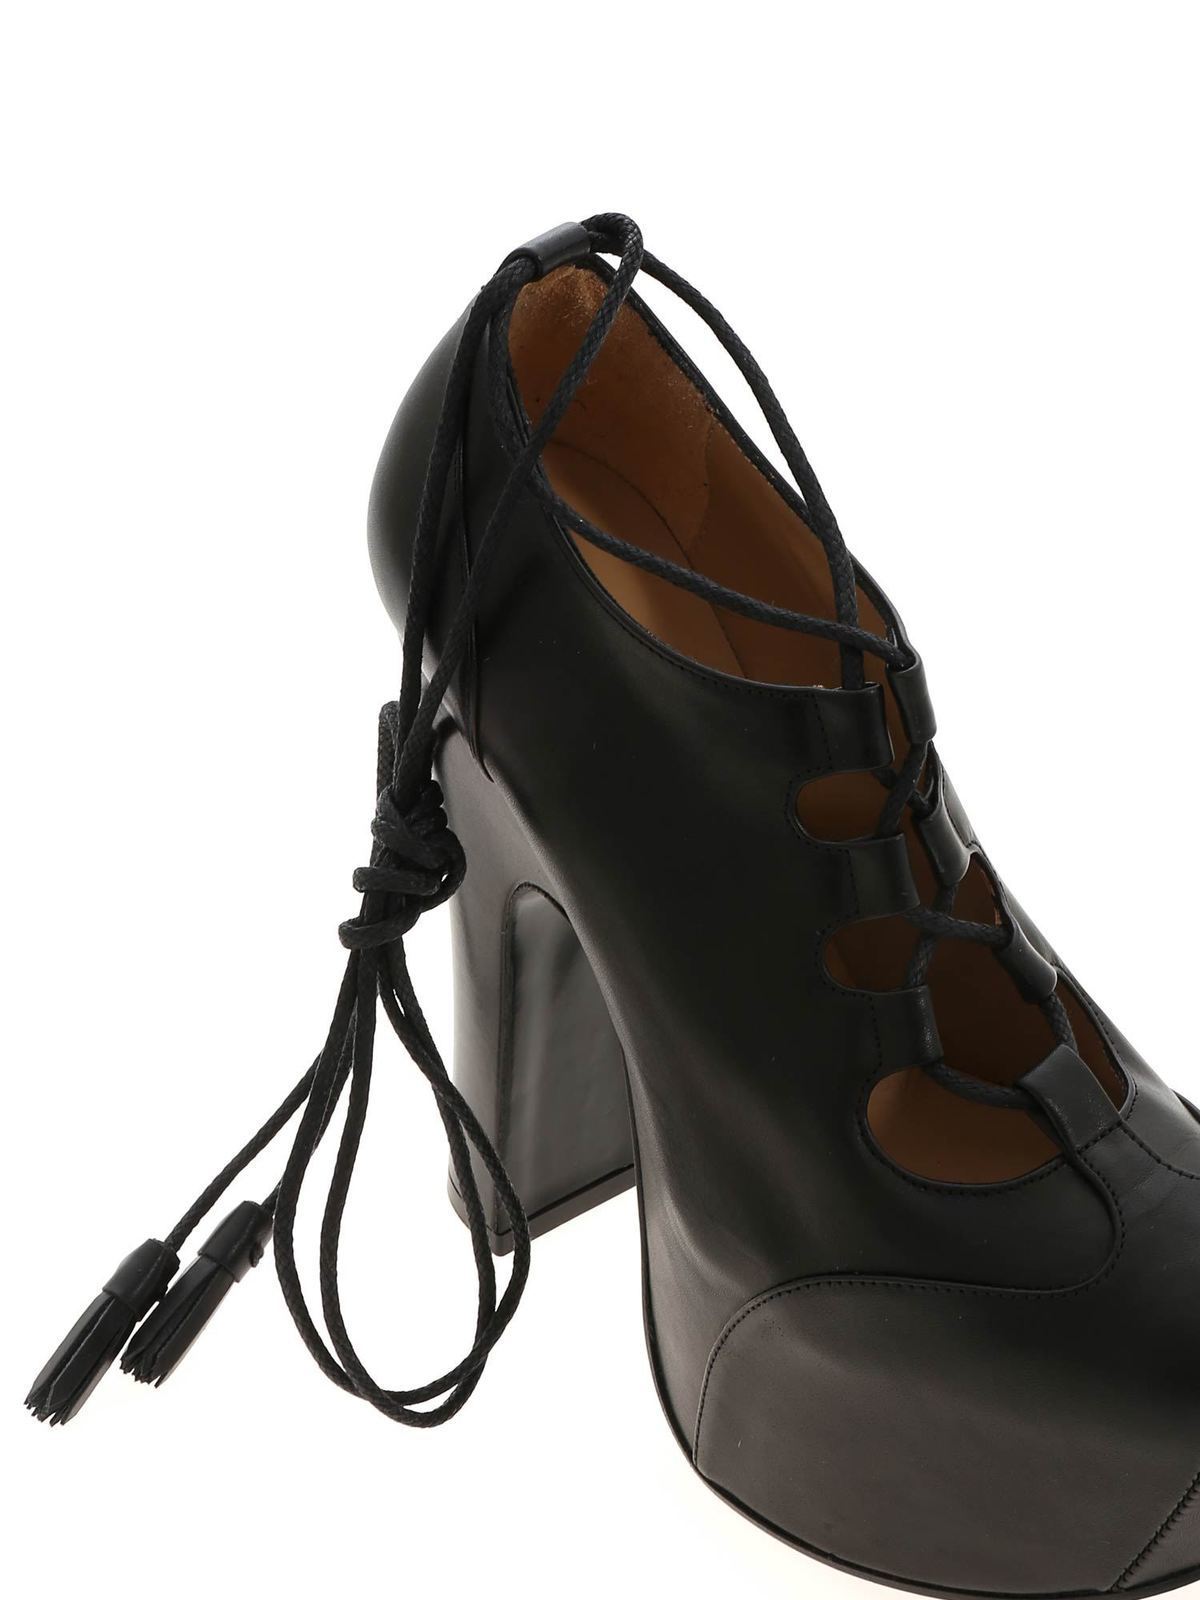 shoes Westwood - Elevated Ghillie in - 7405001241599N401